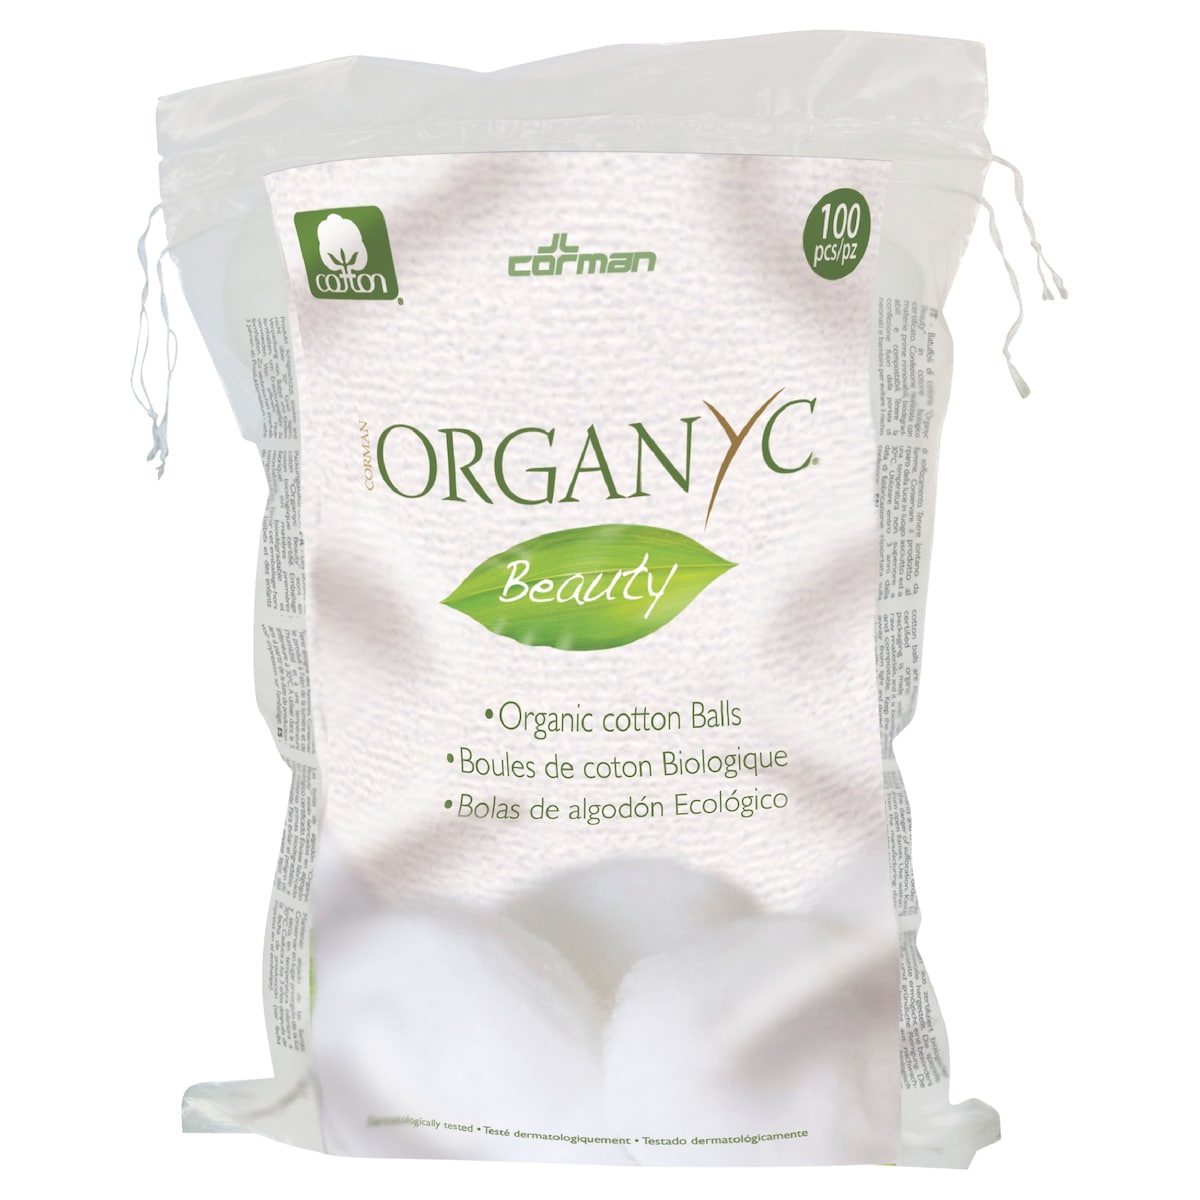 Organyc Beauty Cotton Balls 100 Pack